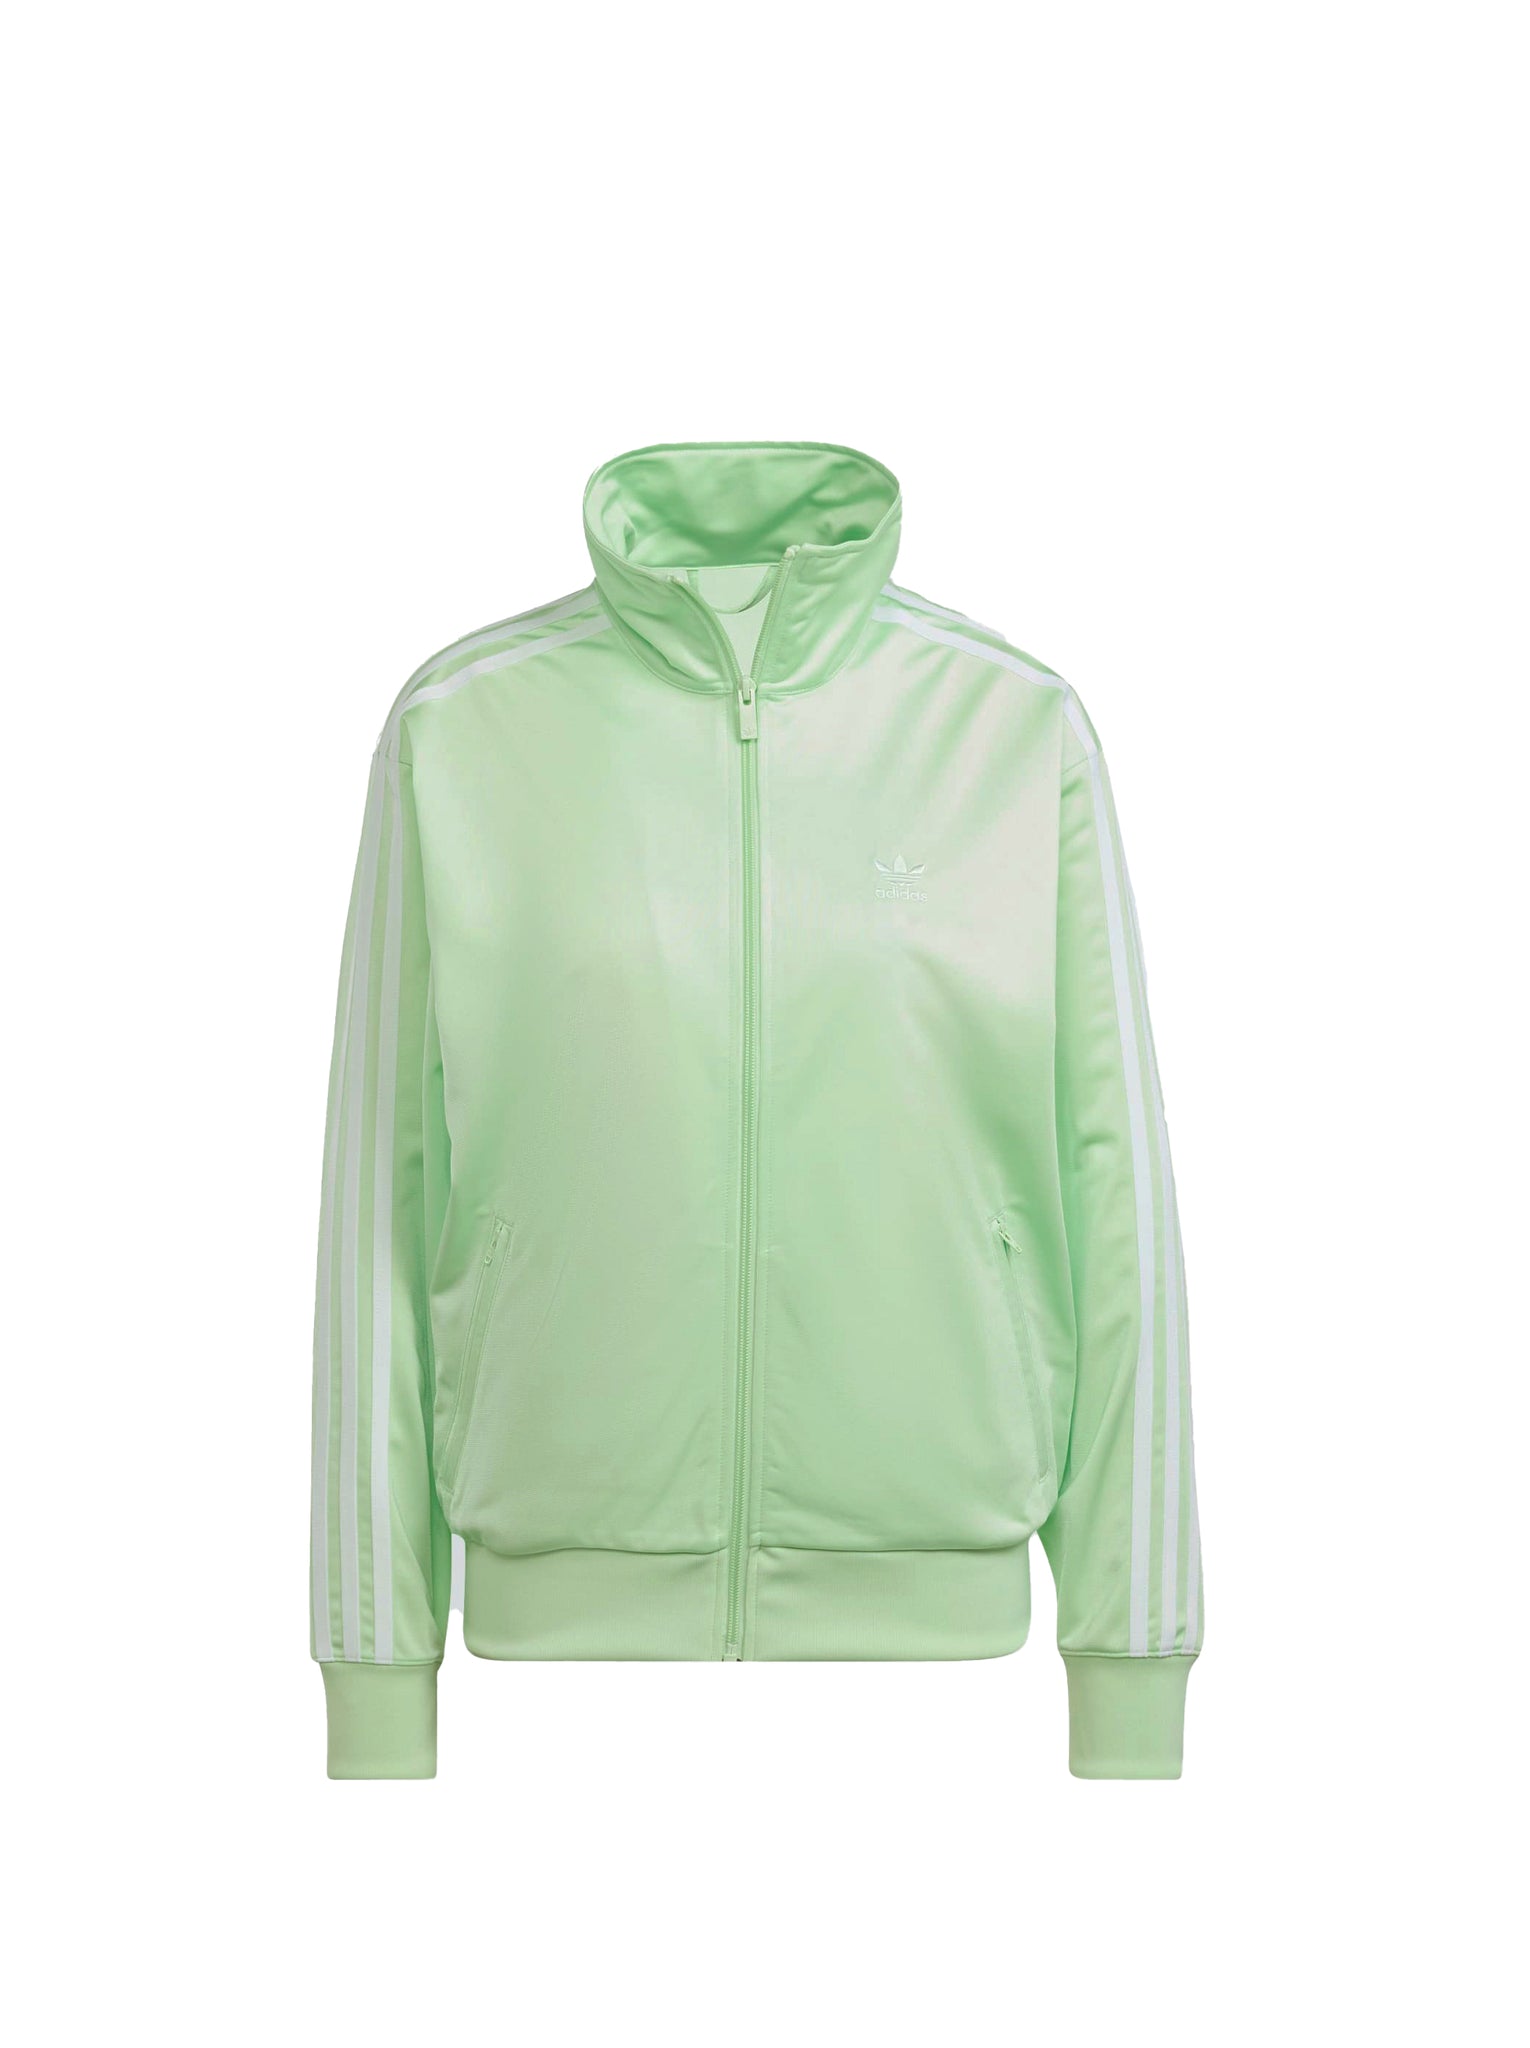 Adidas Firebird Tt Segrsp Aqua Green Women's Zip Sweatshirt